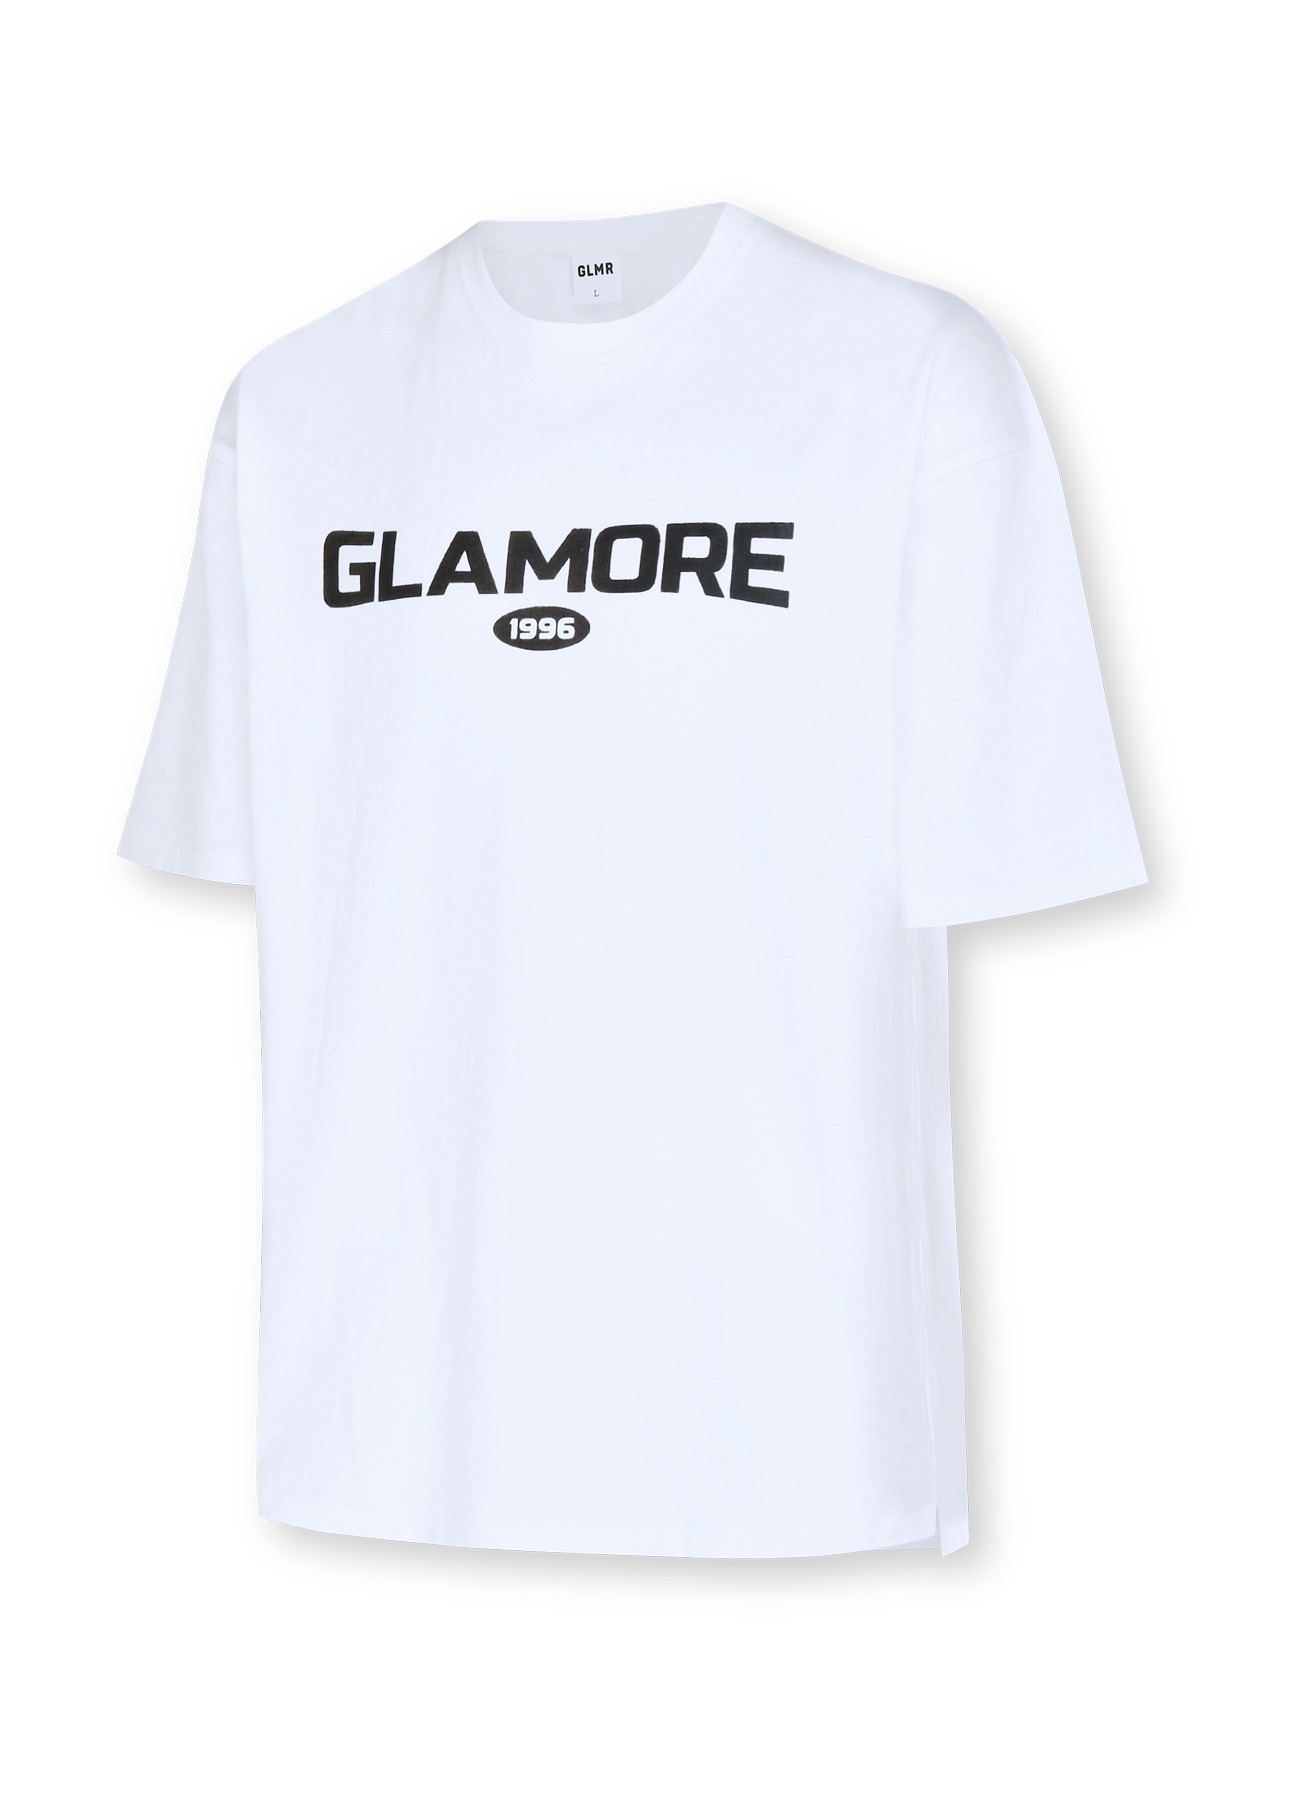 GLAMORE,GLMR 1996로고 오버핏 반팔티,자체브랜드,기본트렌드